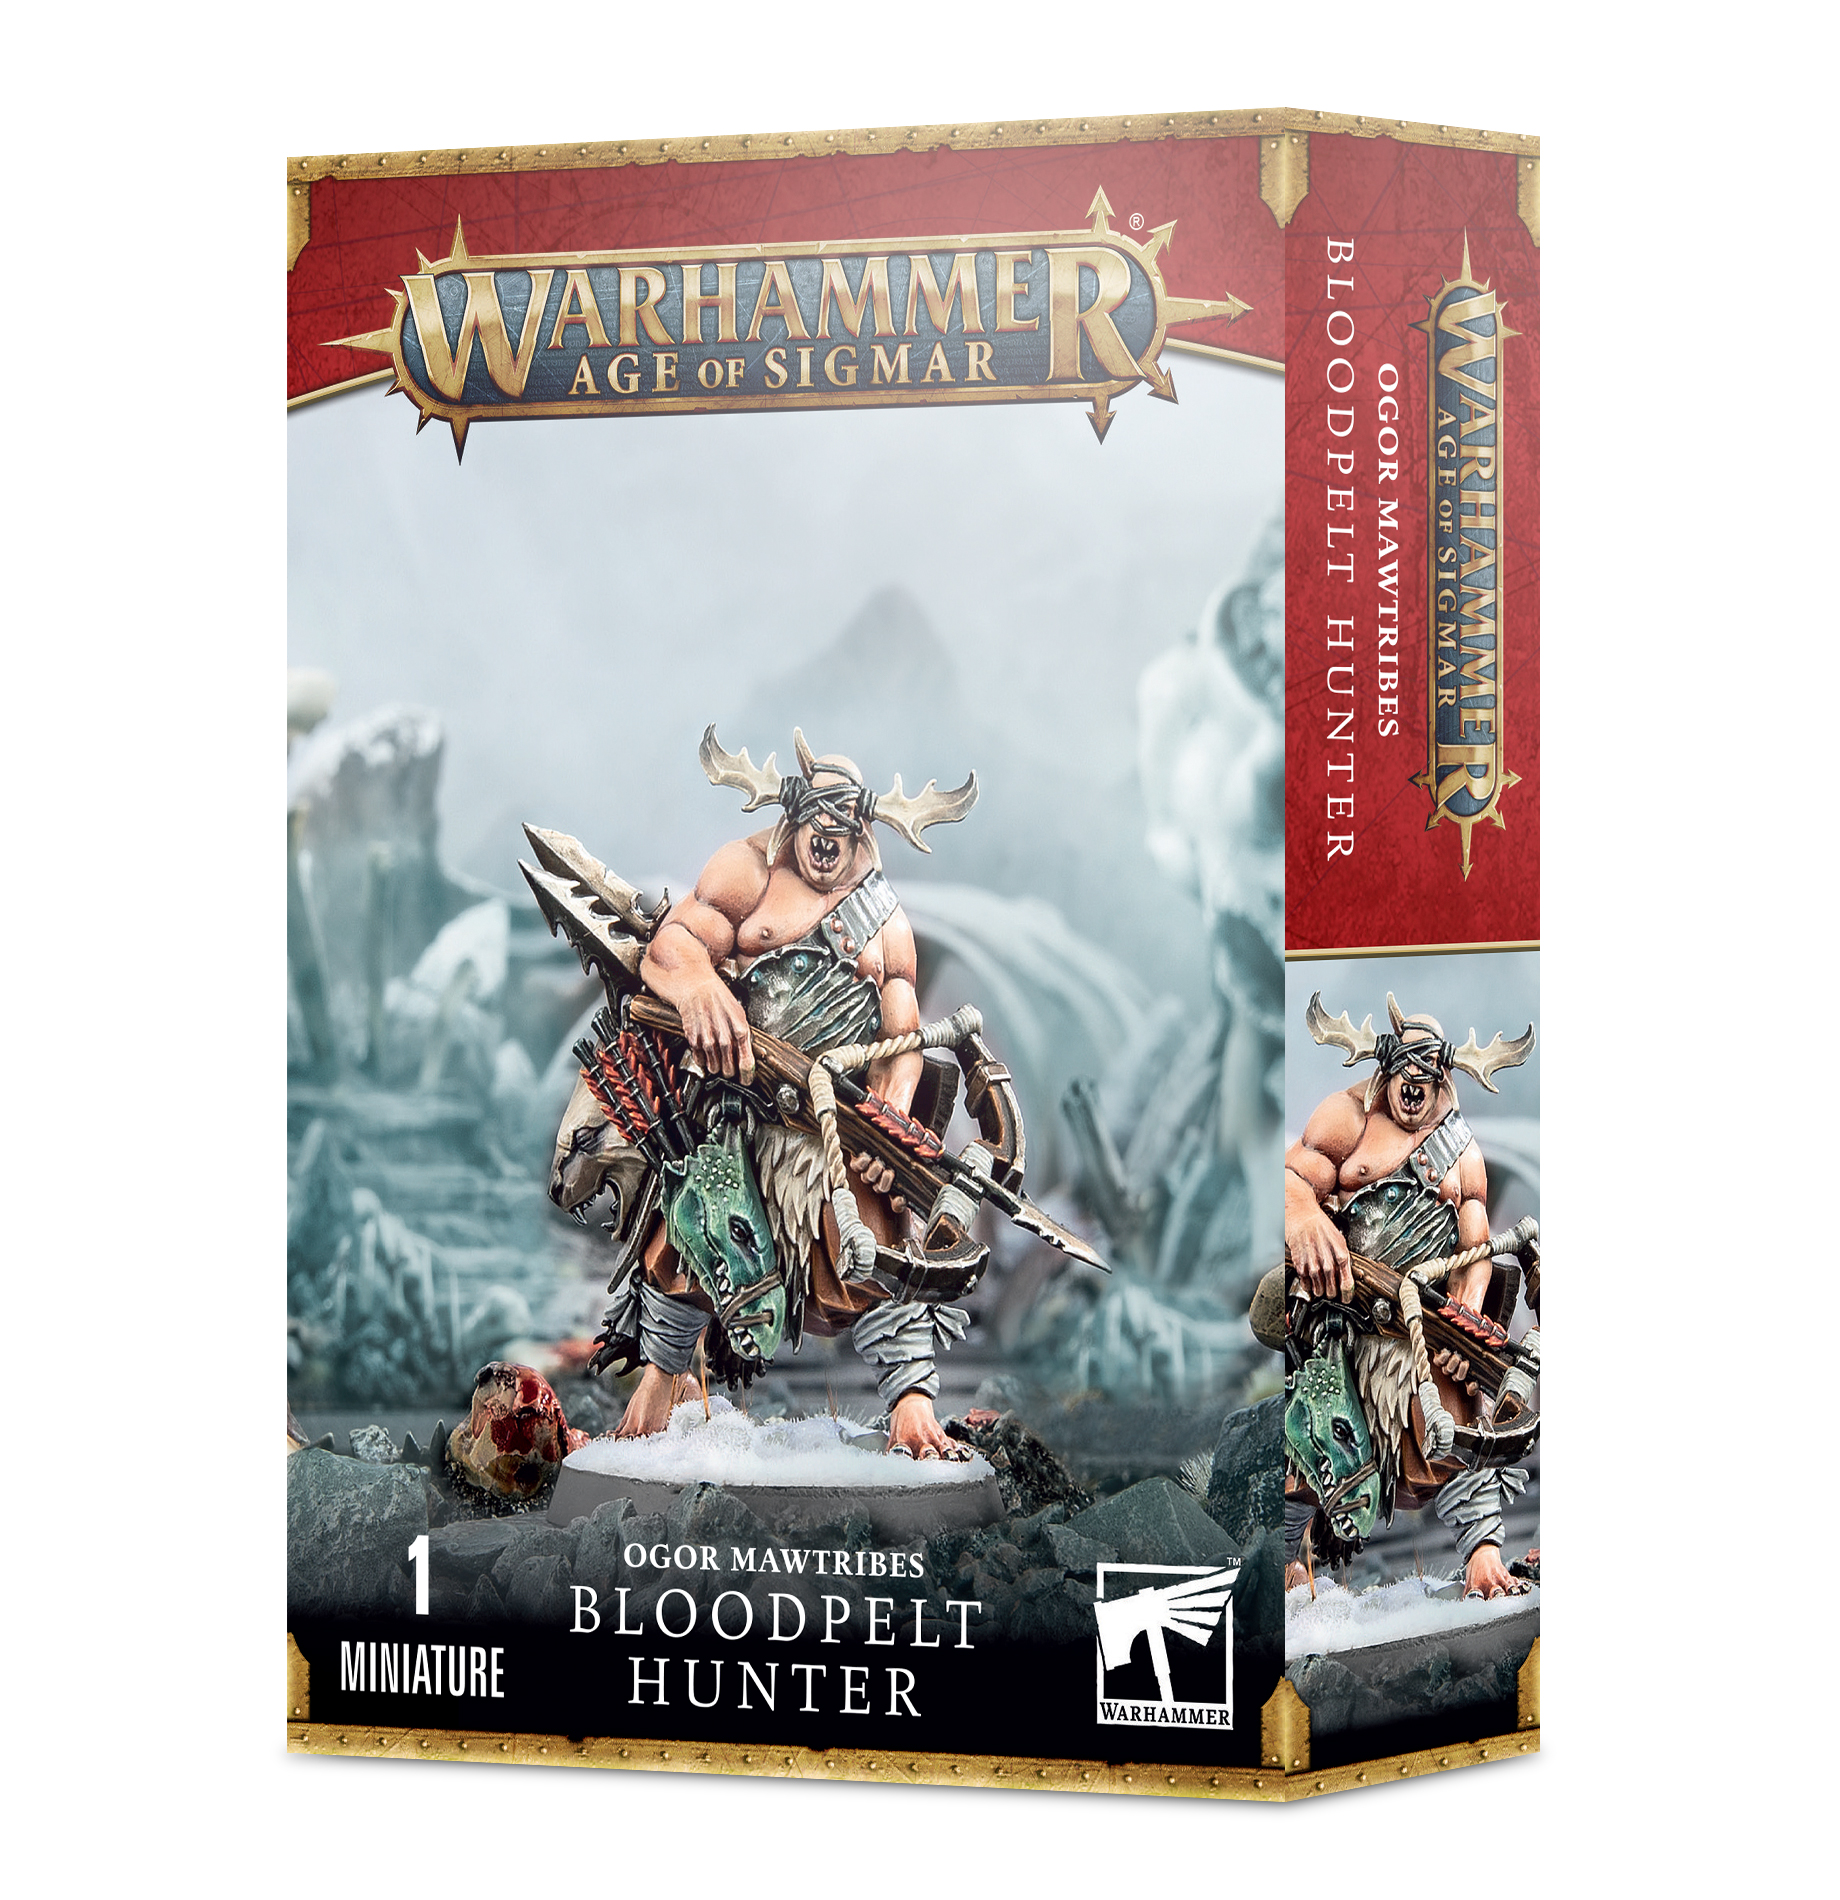 Bloodpelt Hunter - Ogor Mawtribes - 95-21 - Warhammer Age of Sigmar